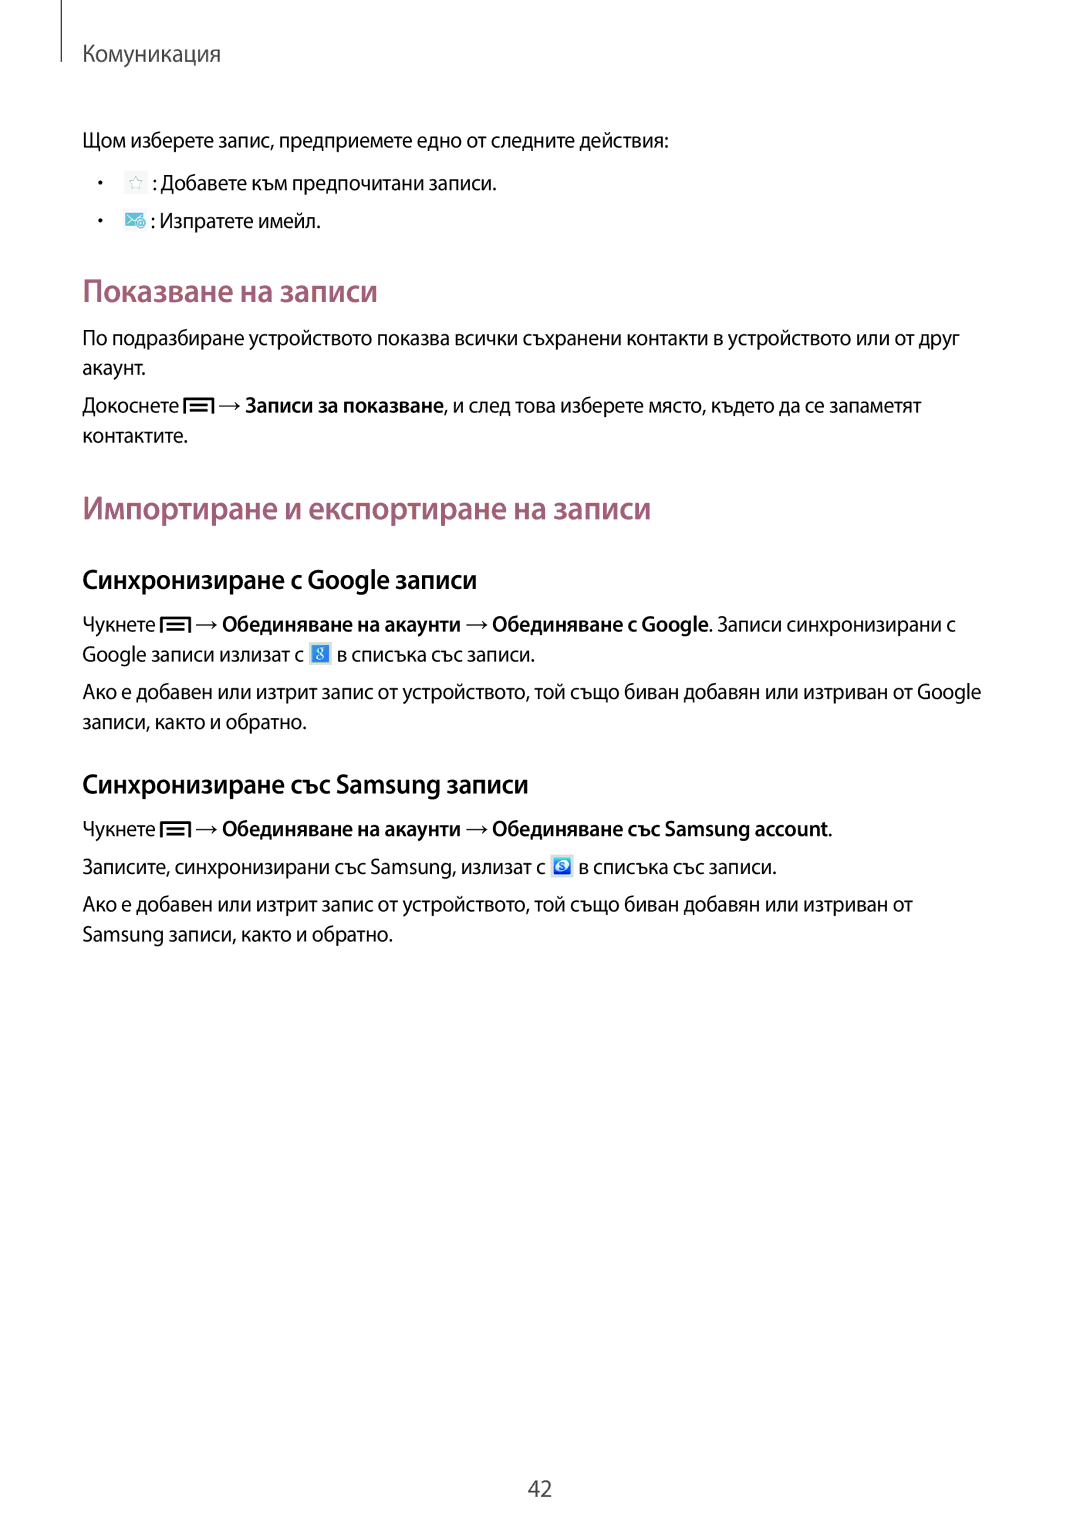 Samsung GT-P5200ZWABGL manual Показване на записи, Импортиране и експортиране на записи, Синхронизиране с Google записи 